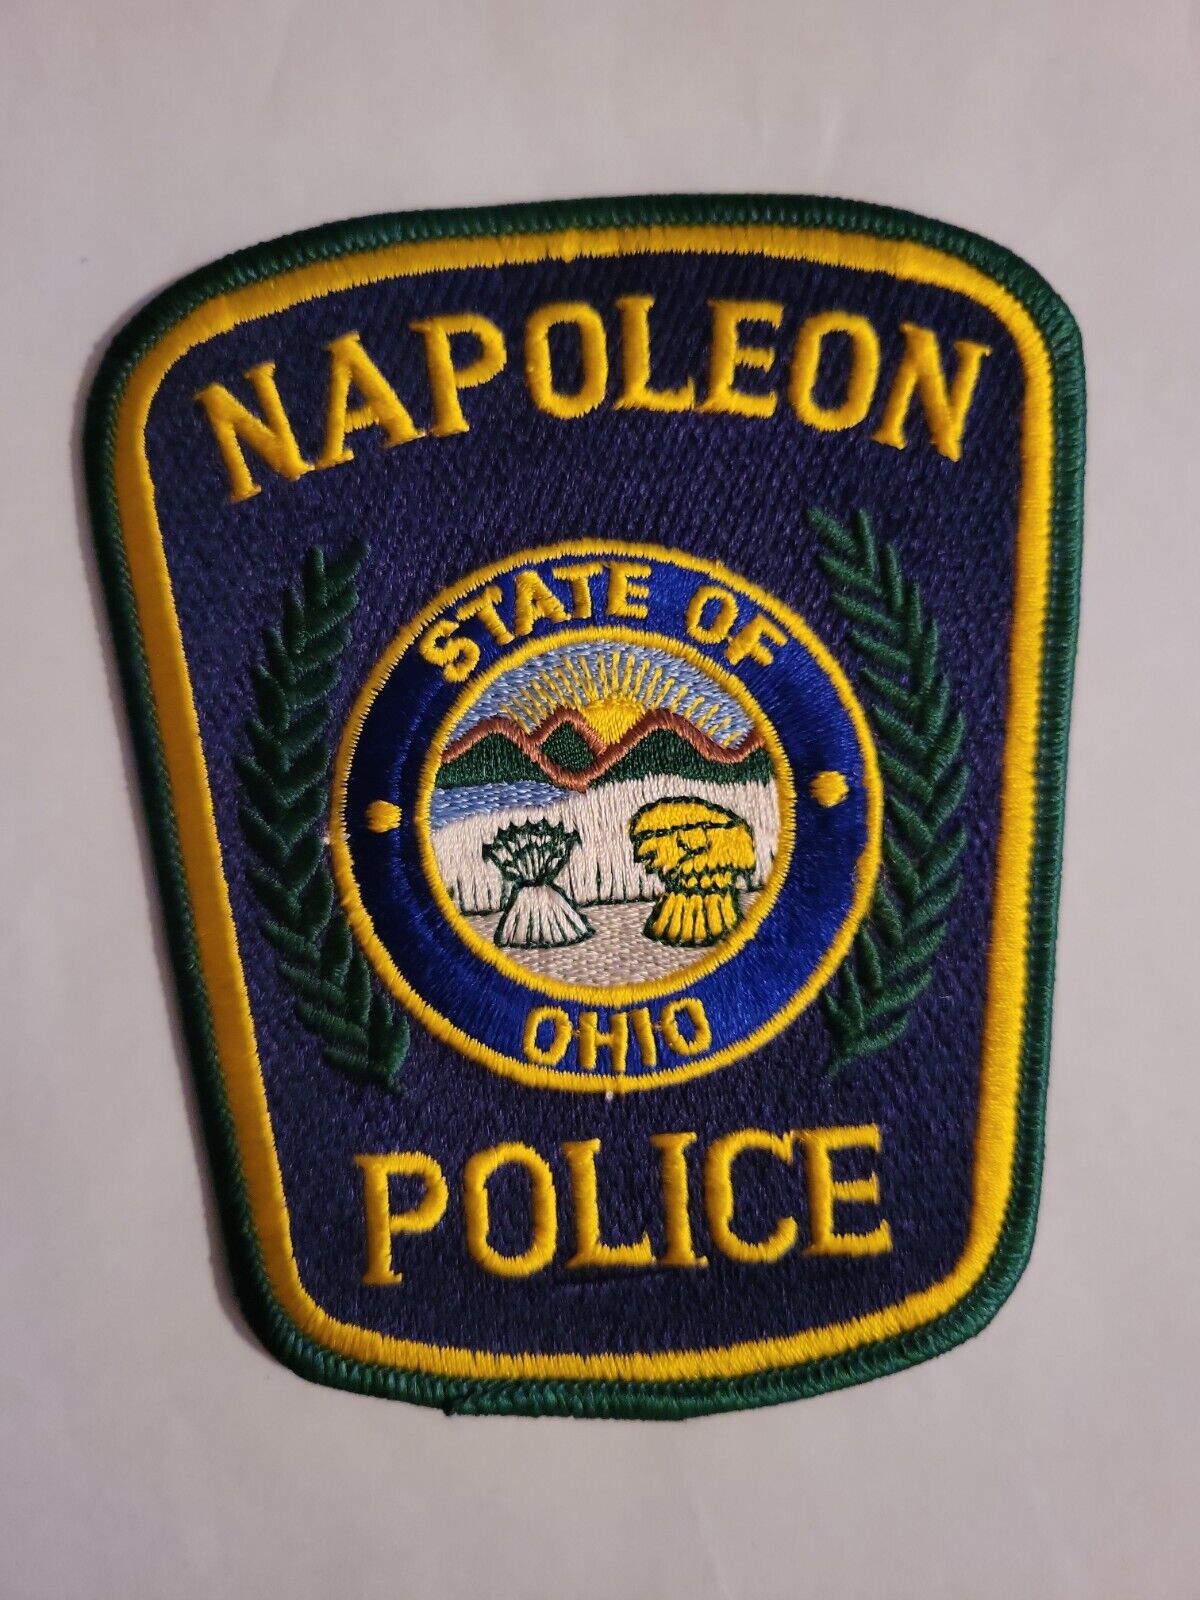 OHIO OH NAPOLEON POLICE SHOULDER PATCH - NEW